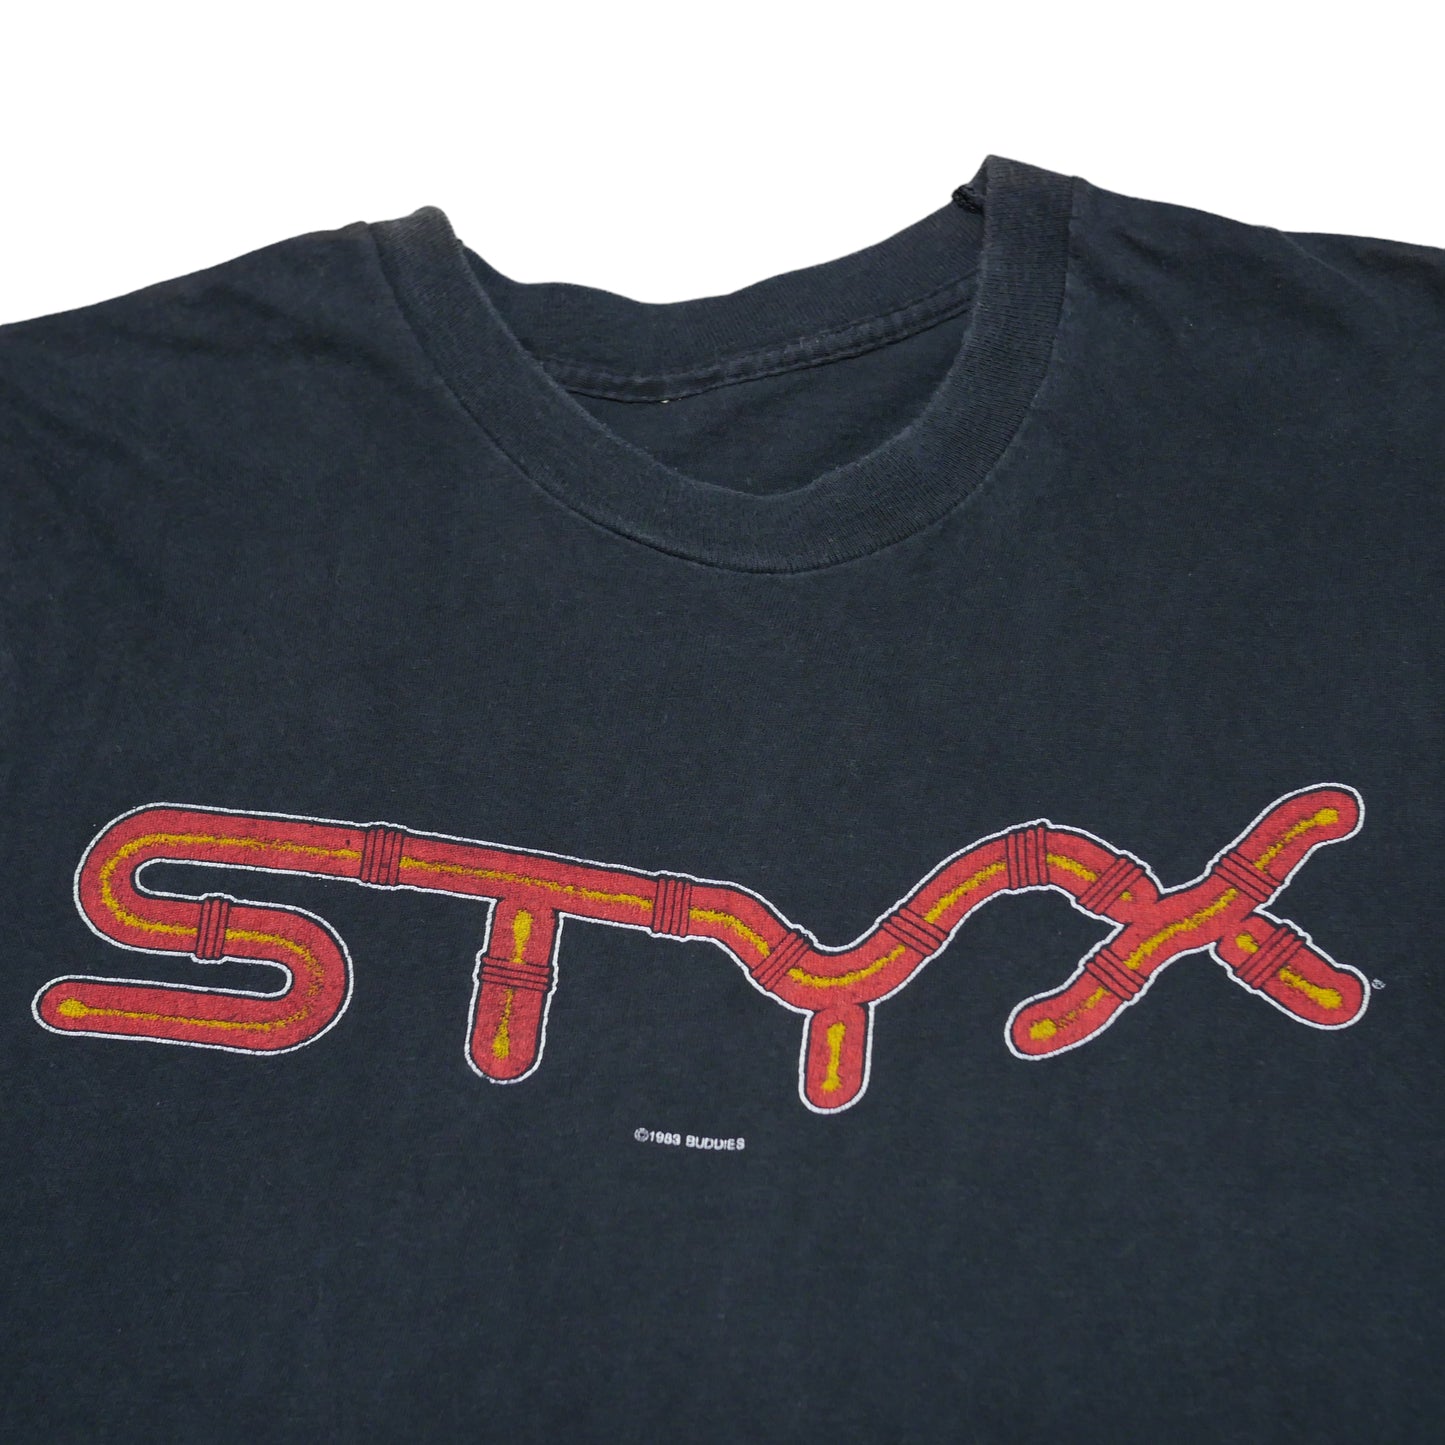 Styx Kilroy Was Here Tour 1983 Shirt - Small